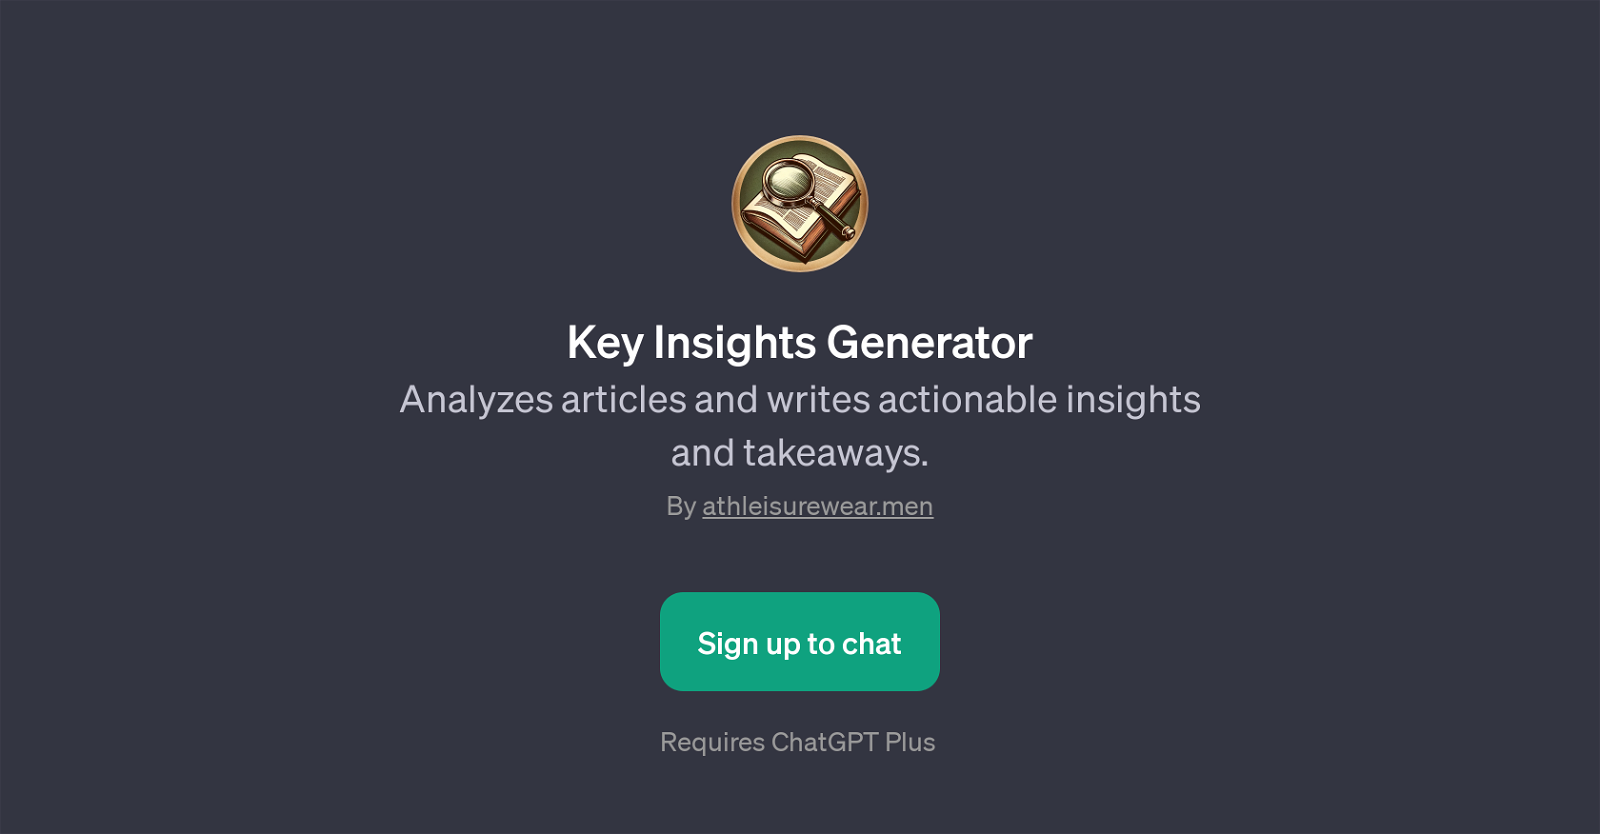 Key Insights Generator website